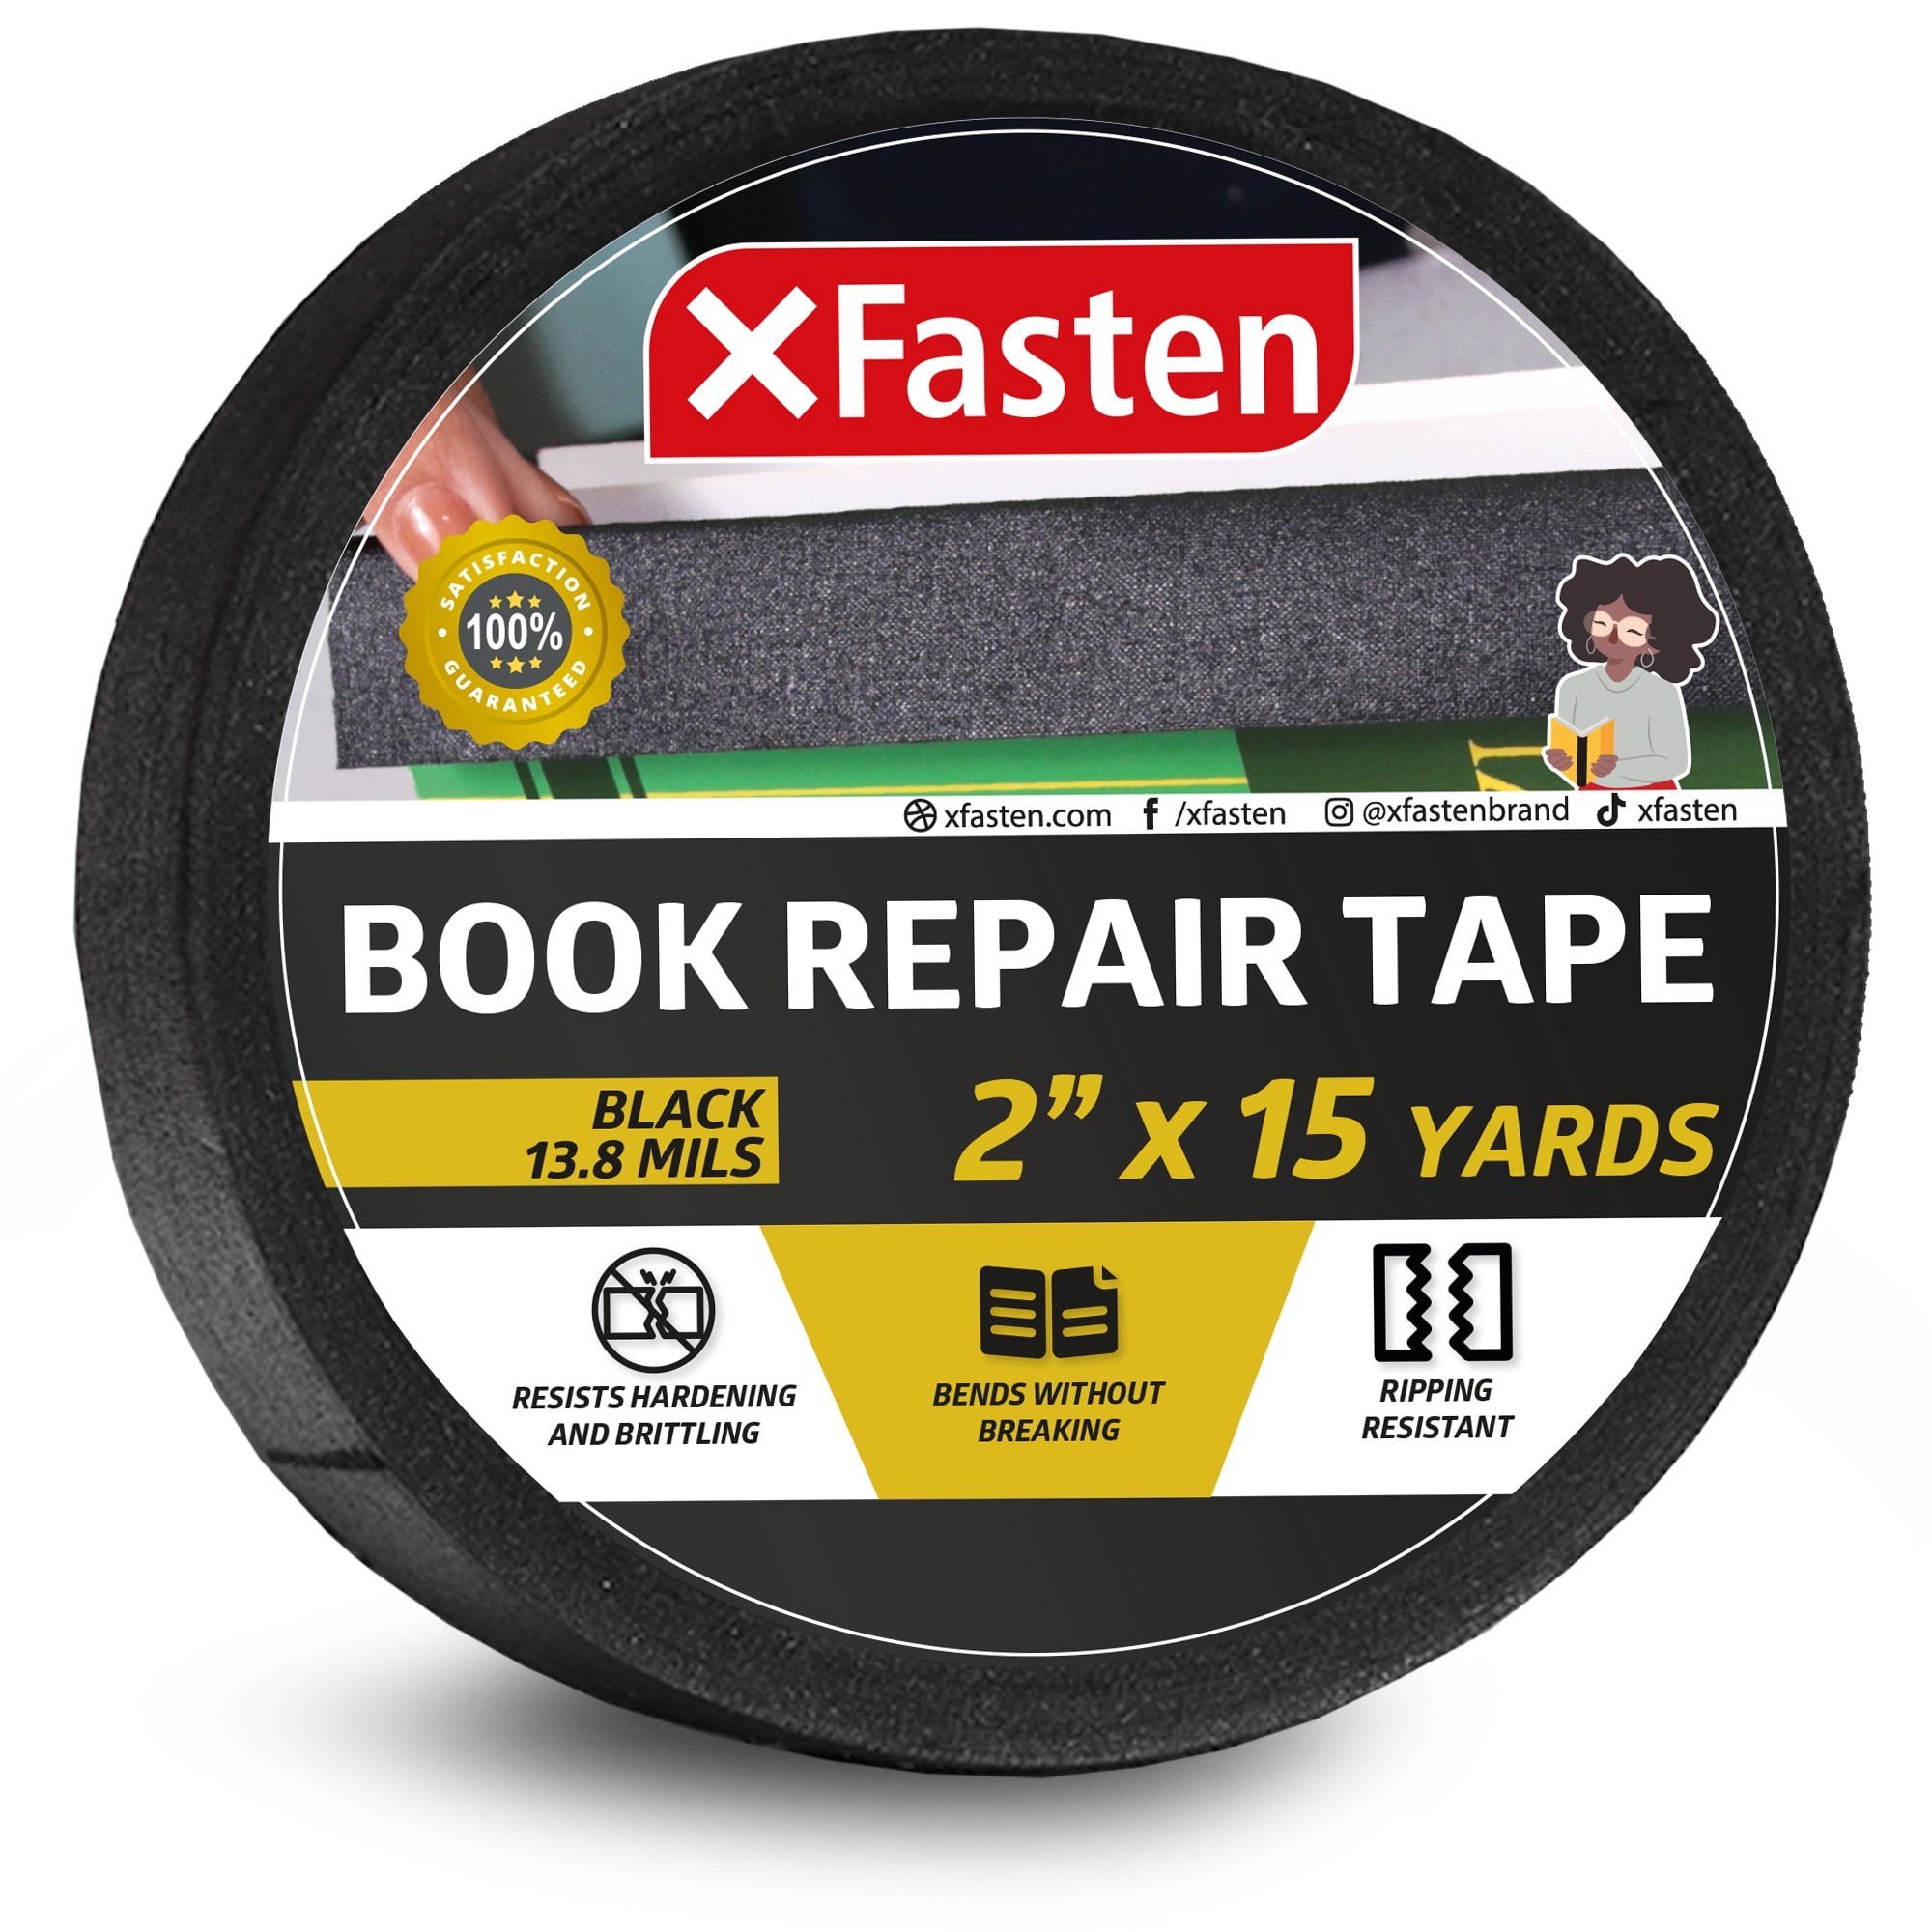 Lineco Book Repair Tape White